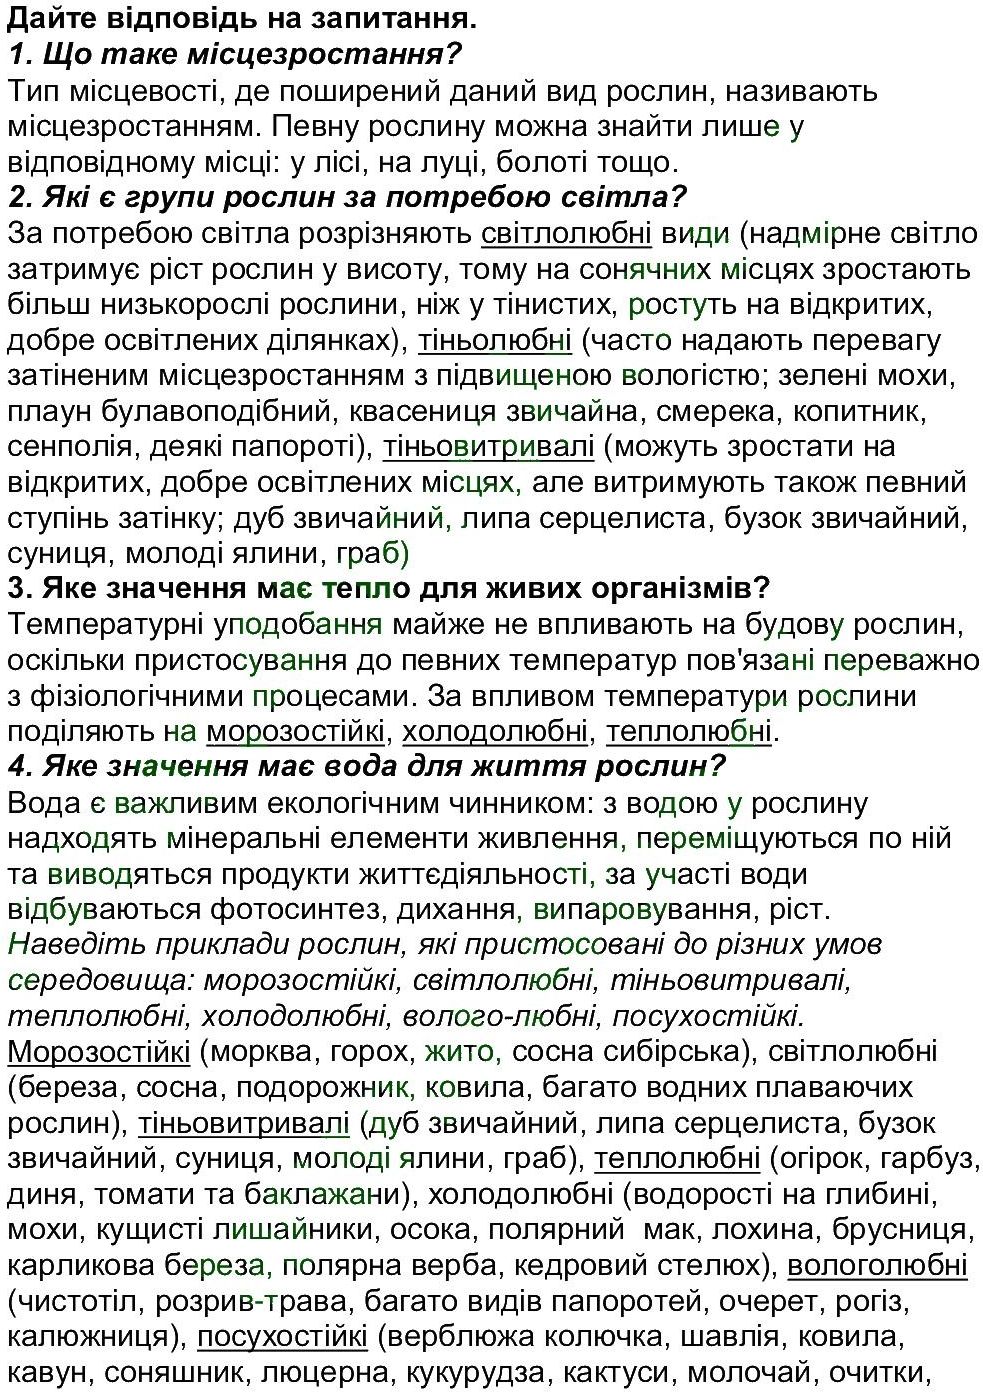 6-biologiya-li-ostapchenko-pg-balan-nyu-matyash-2016--tema-4-riznomanitnist-roslin-ст174-177-rnd8003.jpg